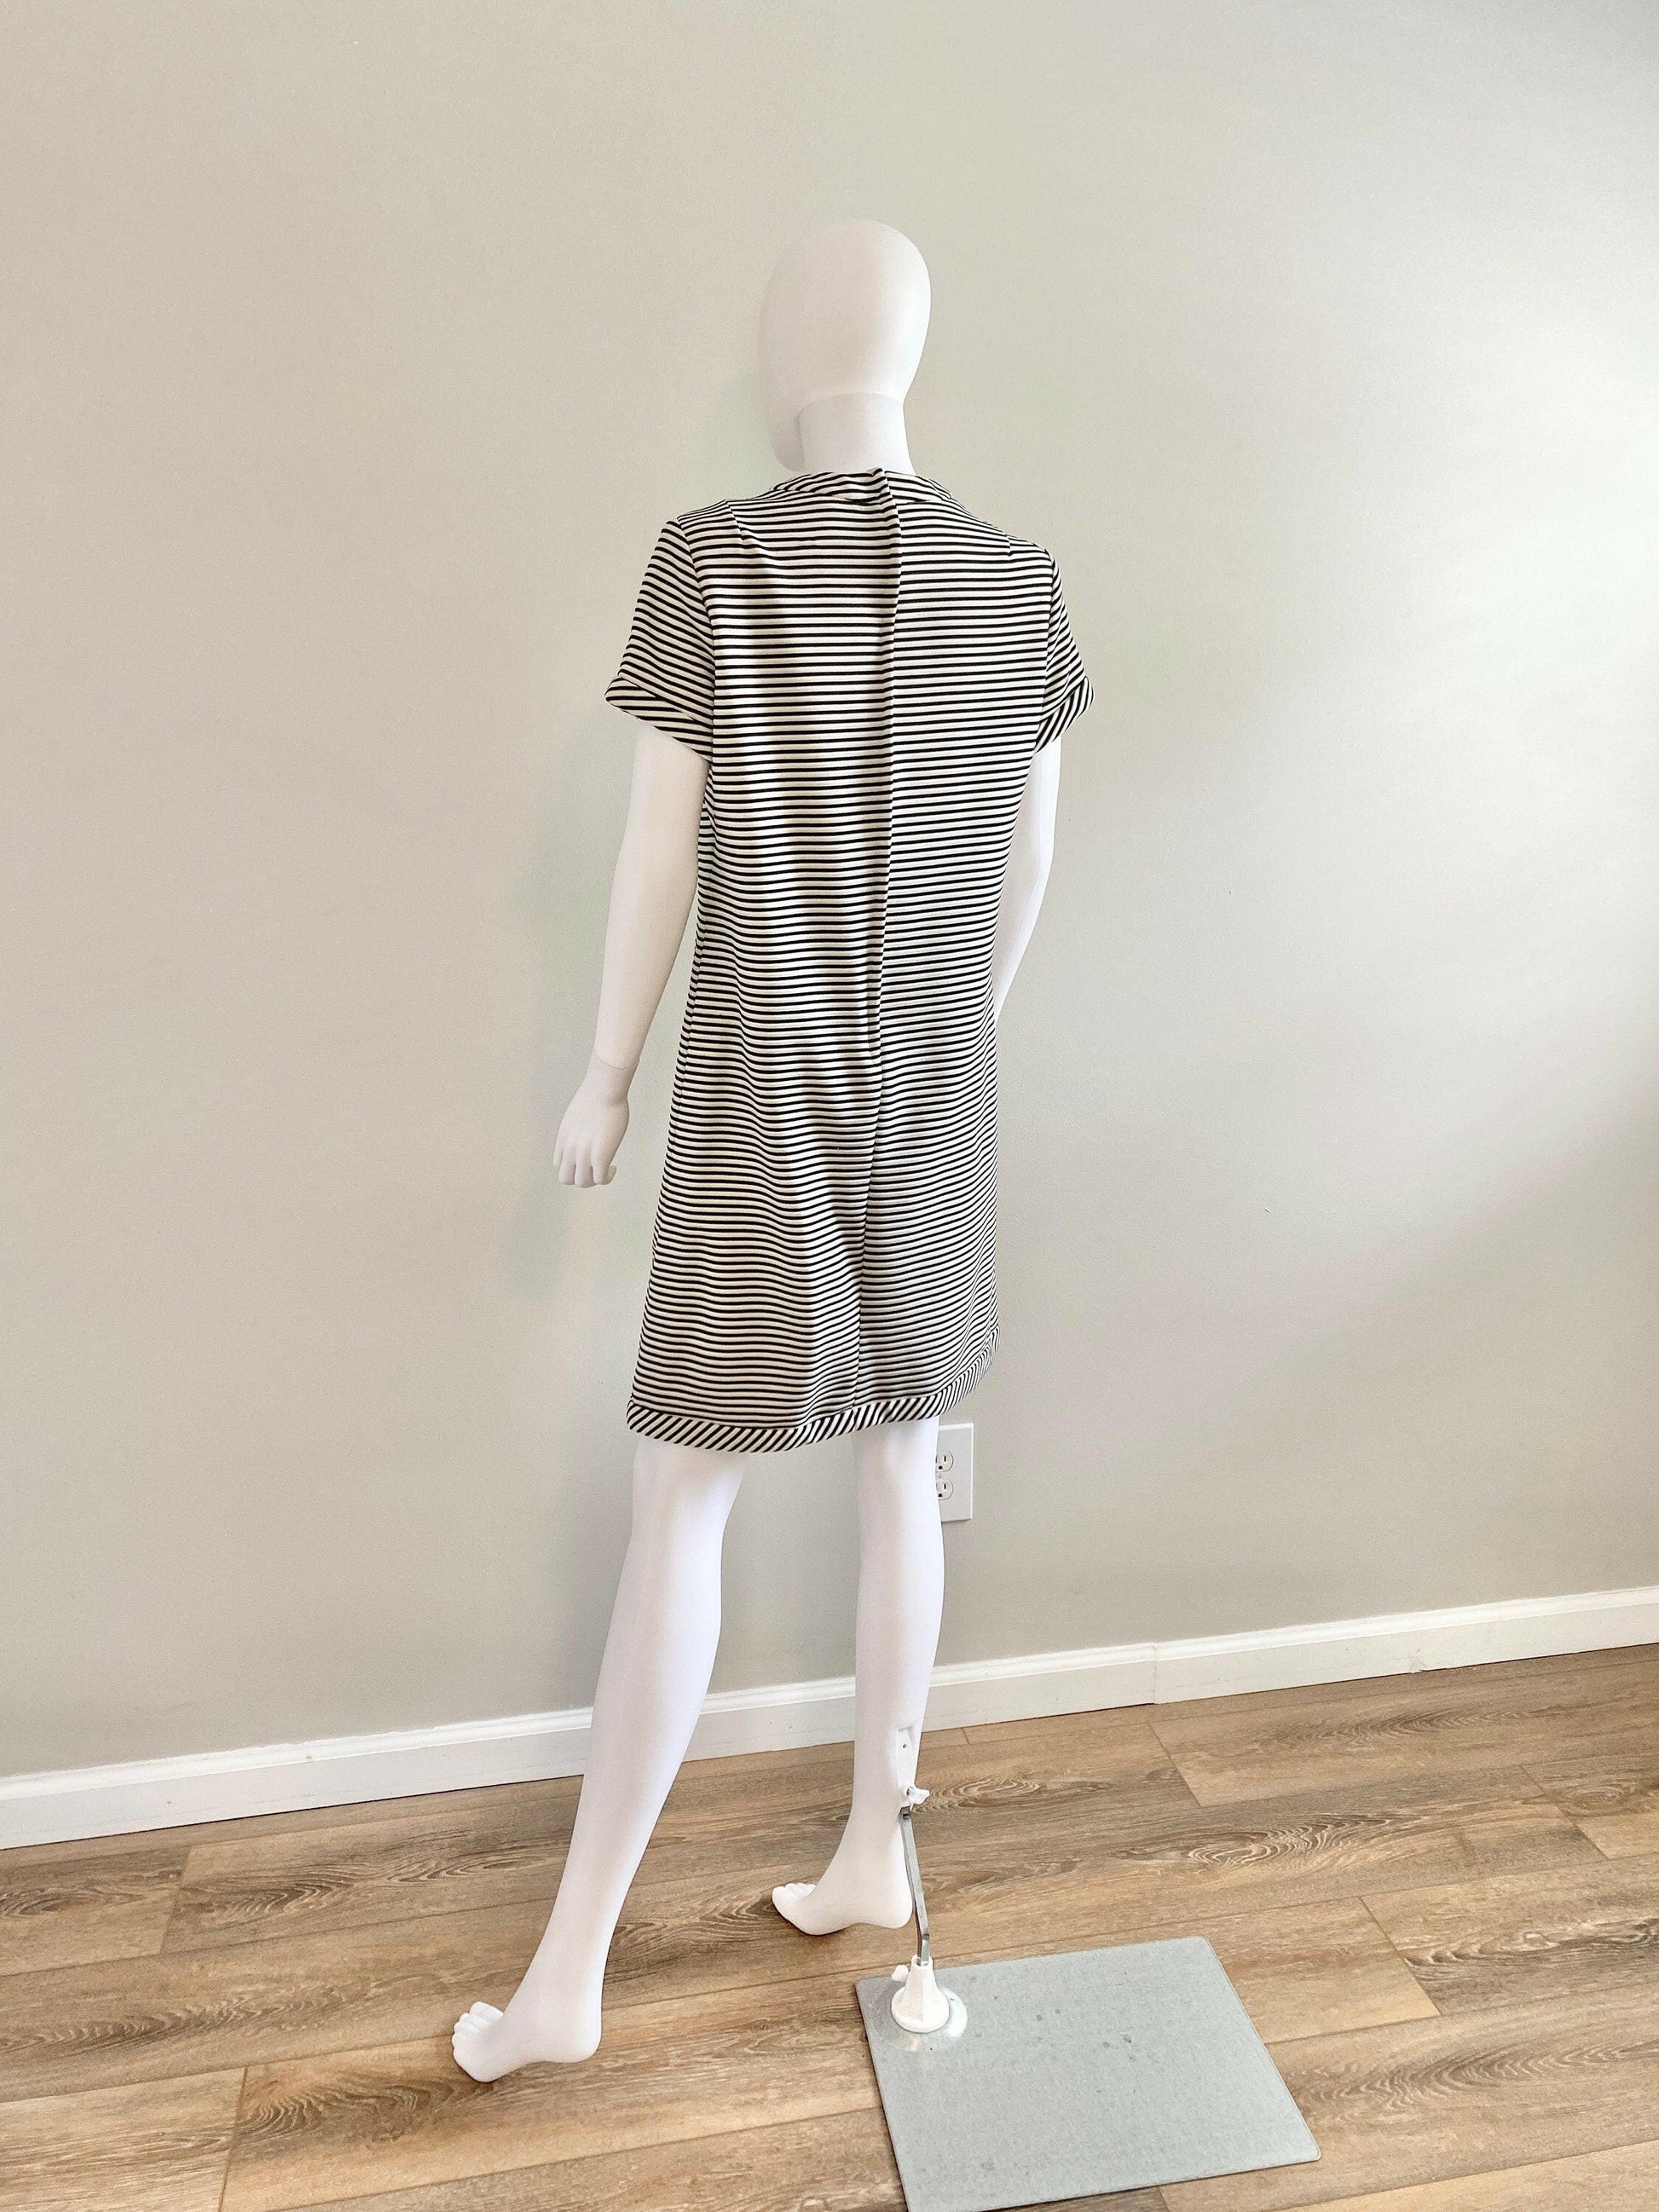 Vintage 1960s Black and White Striped Shift Dress / 60s retro Scooter Dress / Barbie core dress / Size S